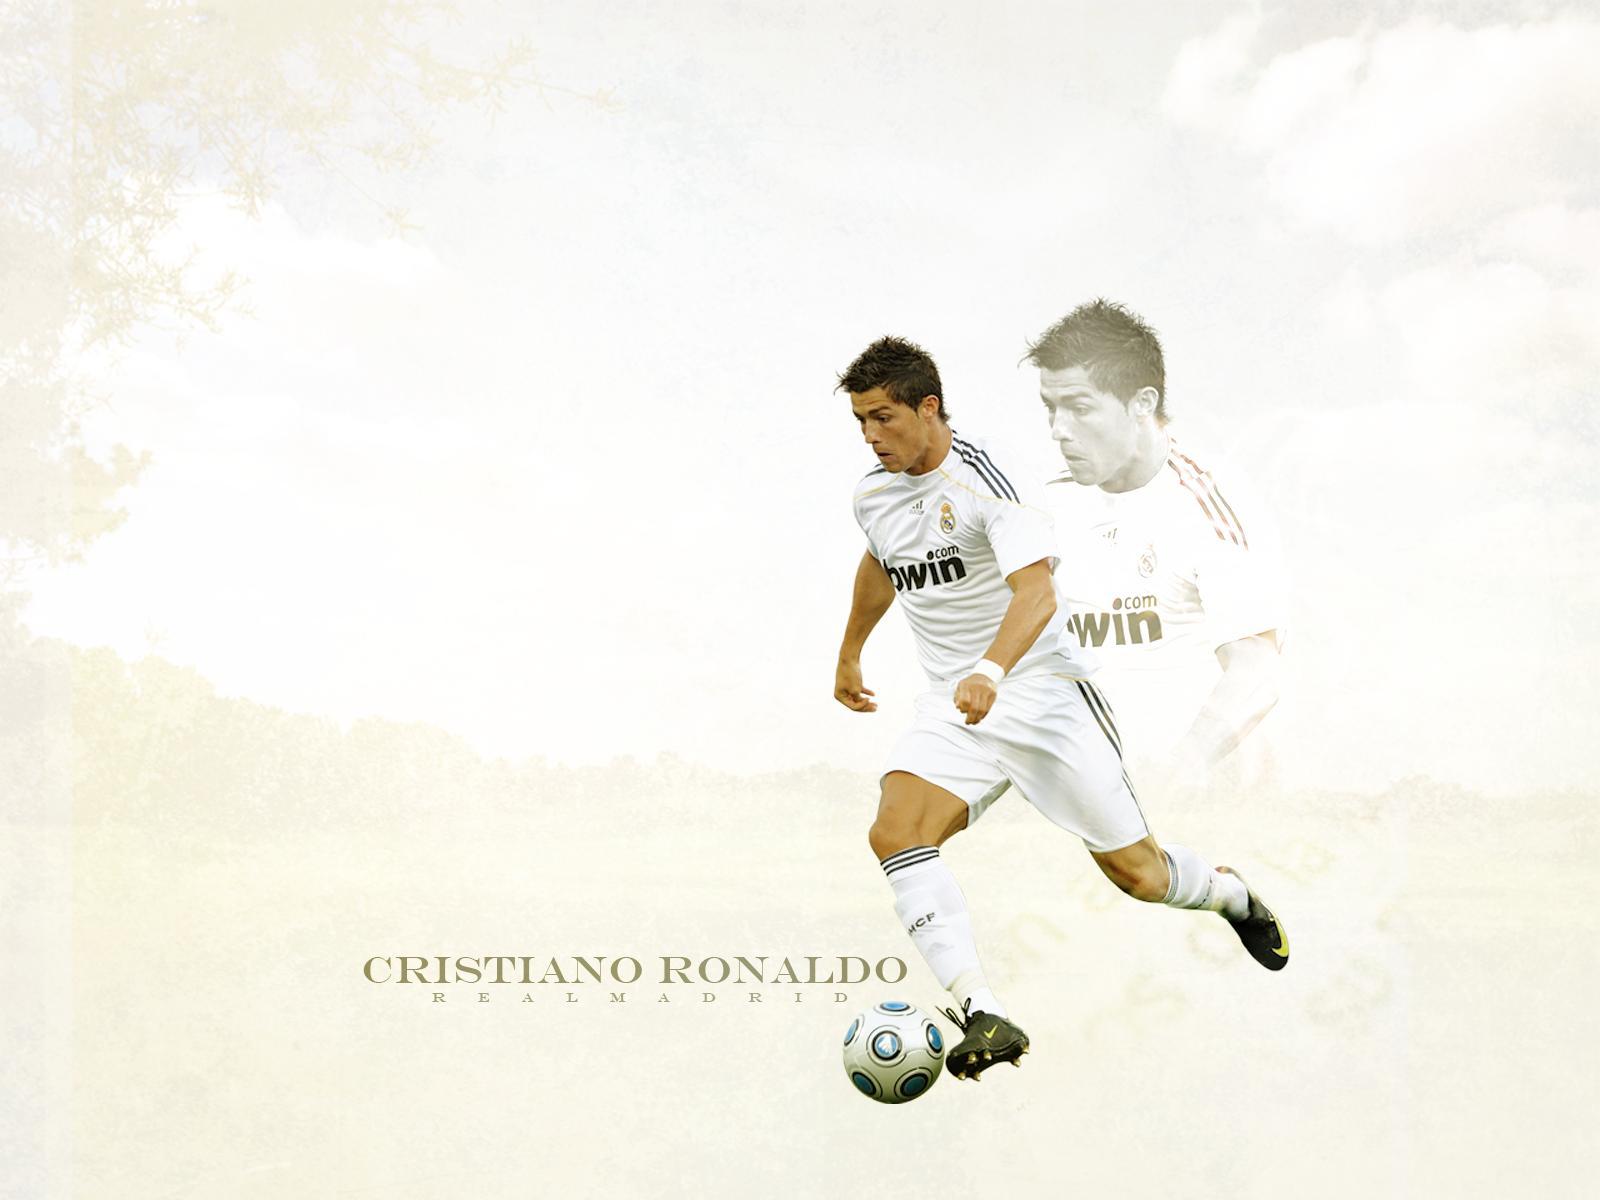 Cristiano Ronaldo Wallpaper 2012. Top Wallpaper. Free